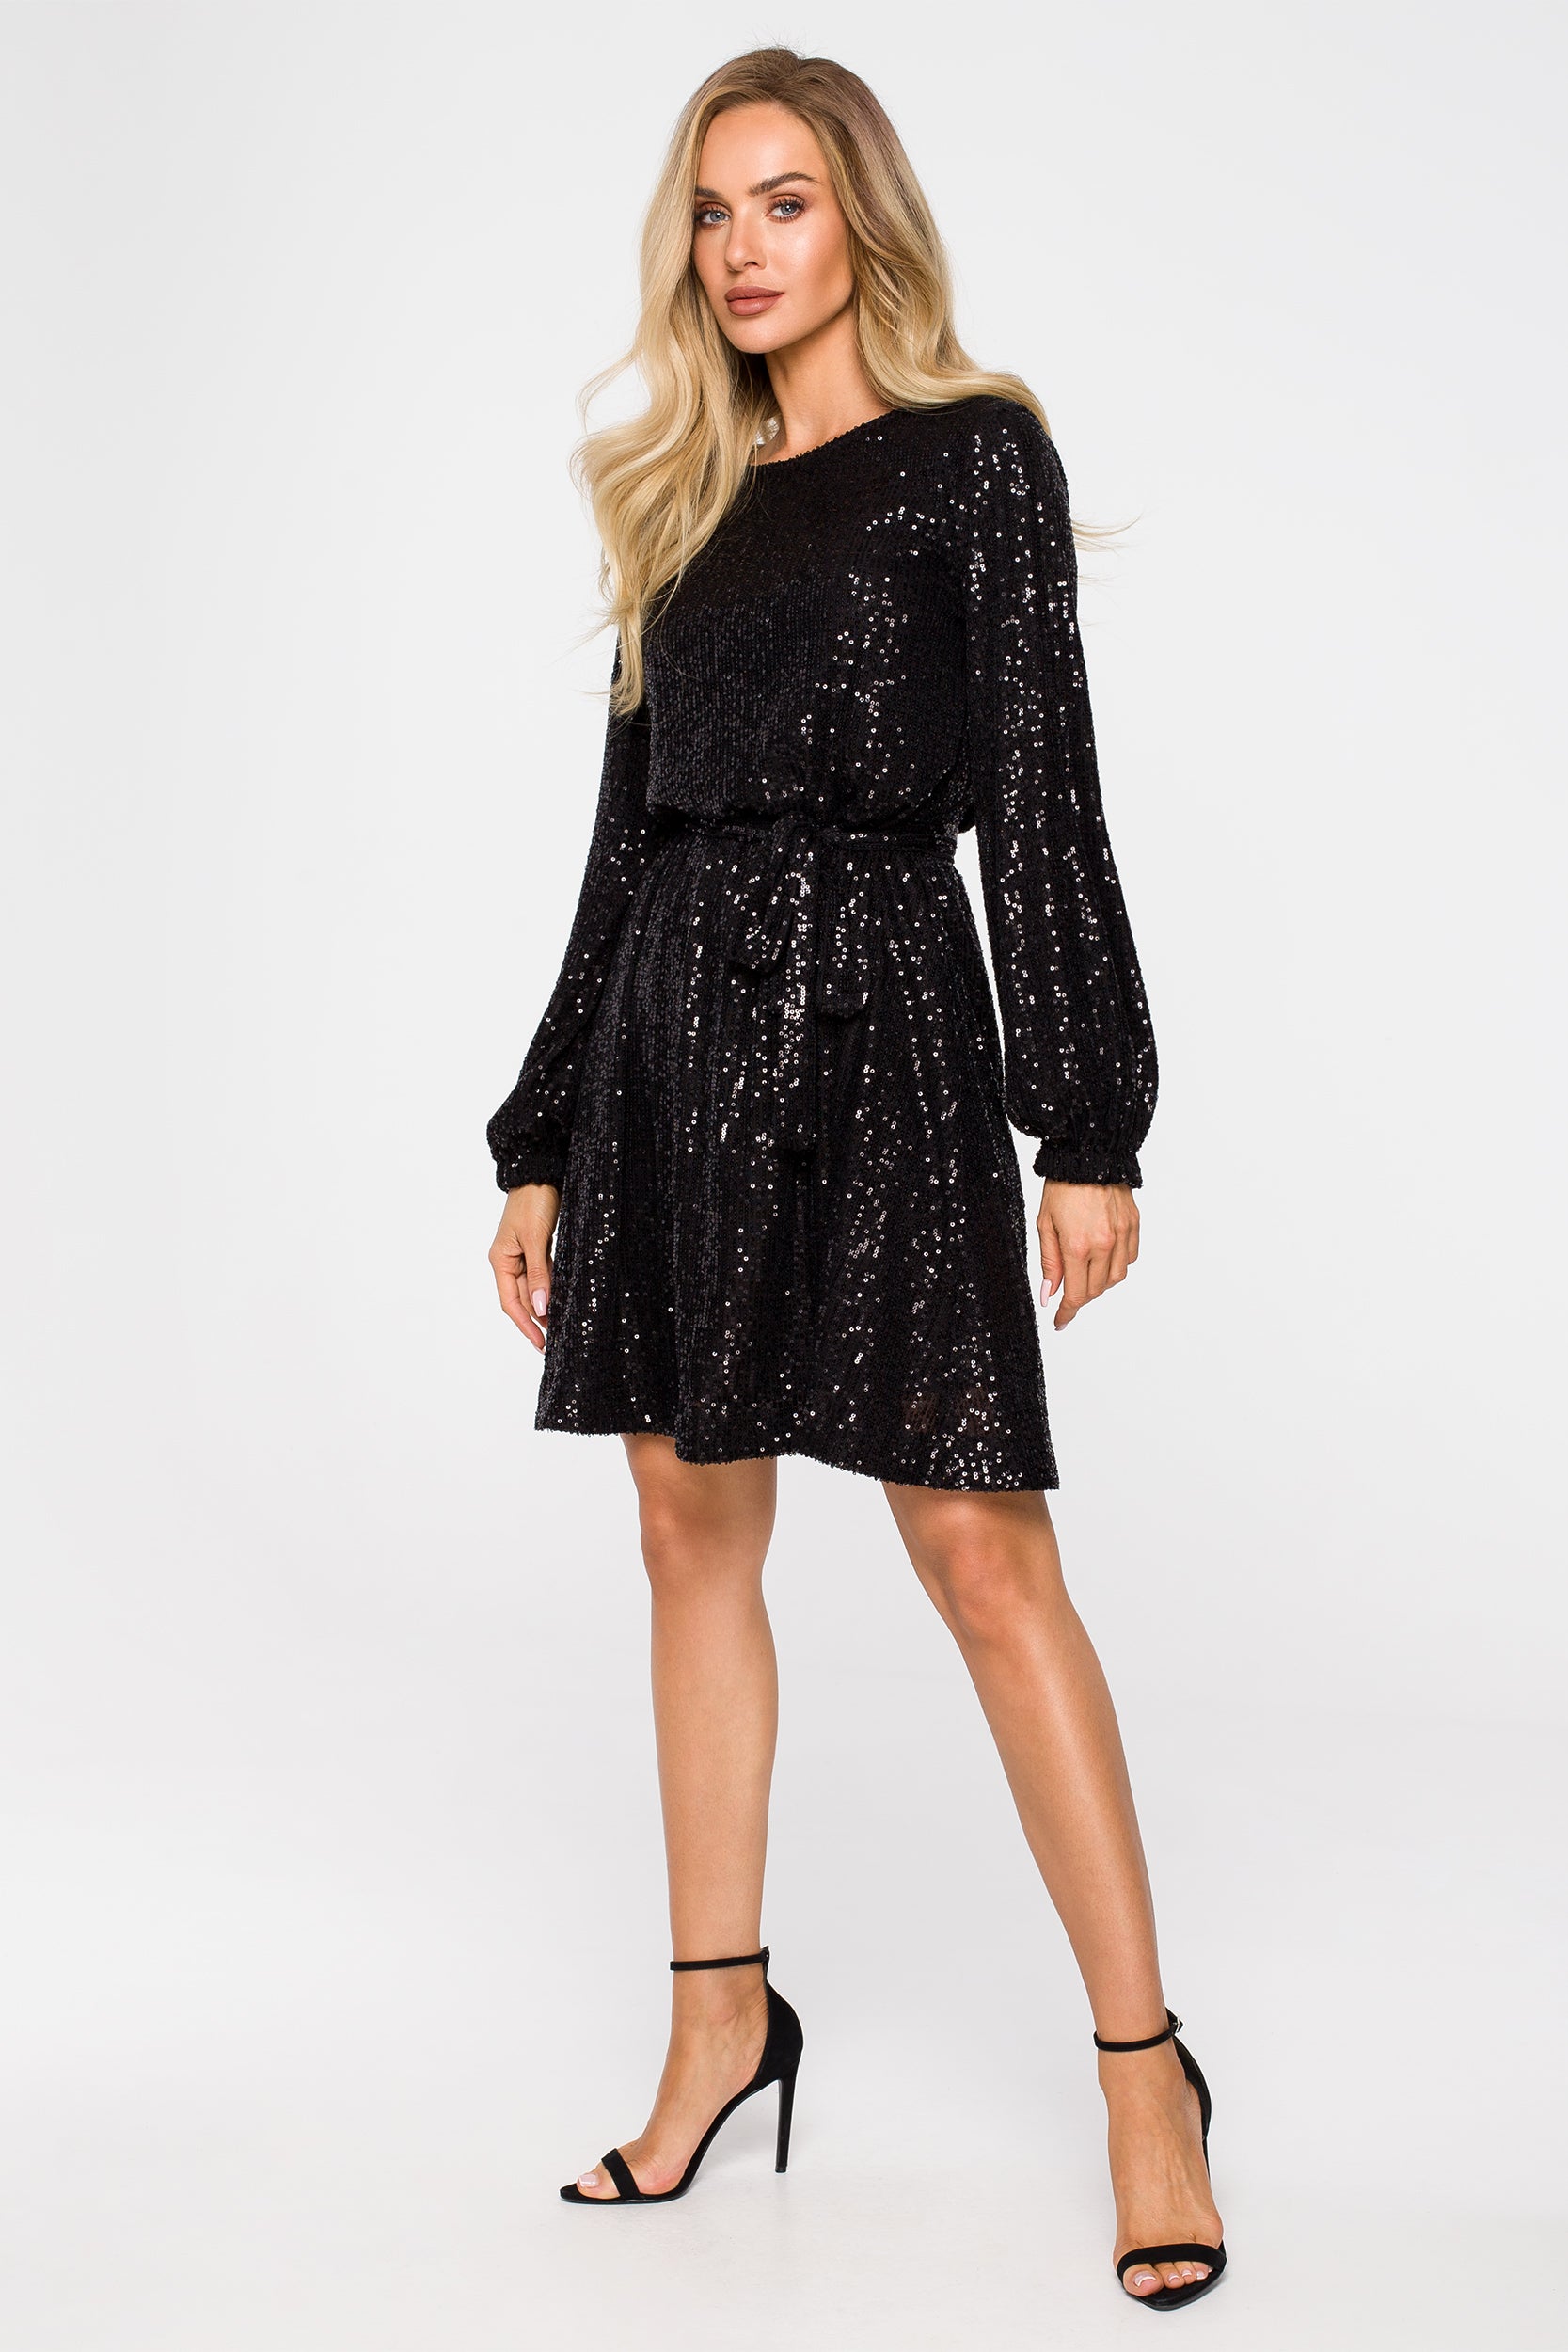 Black Sequin Mini Dress 2-in-1